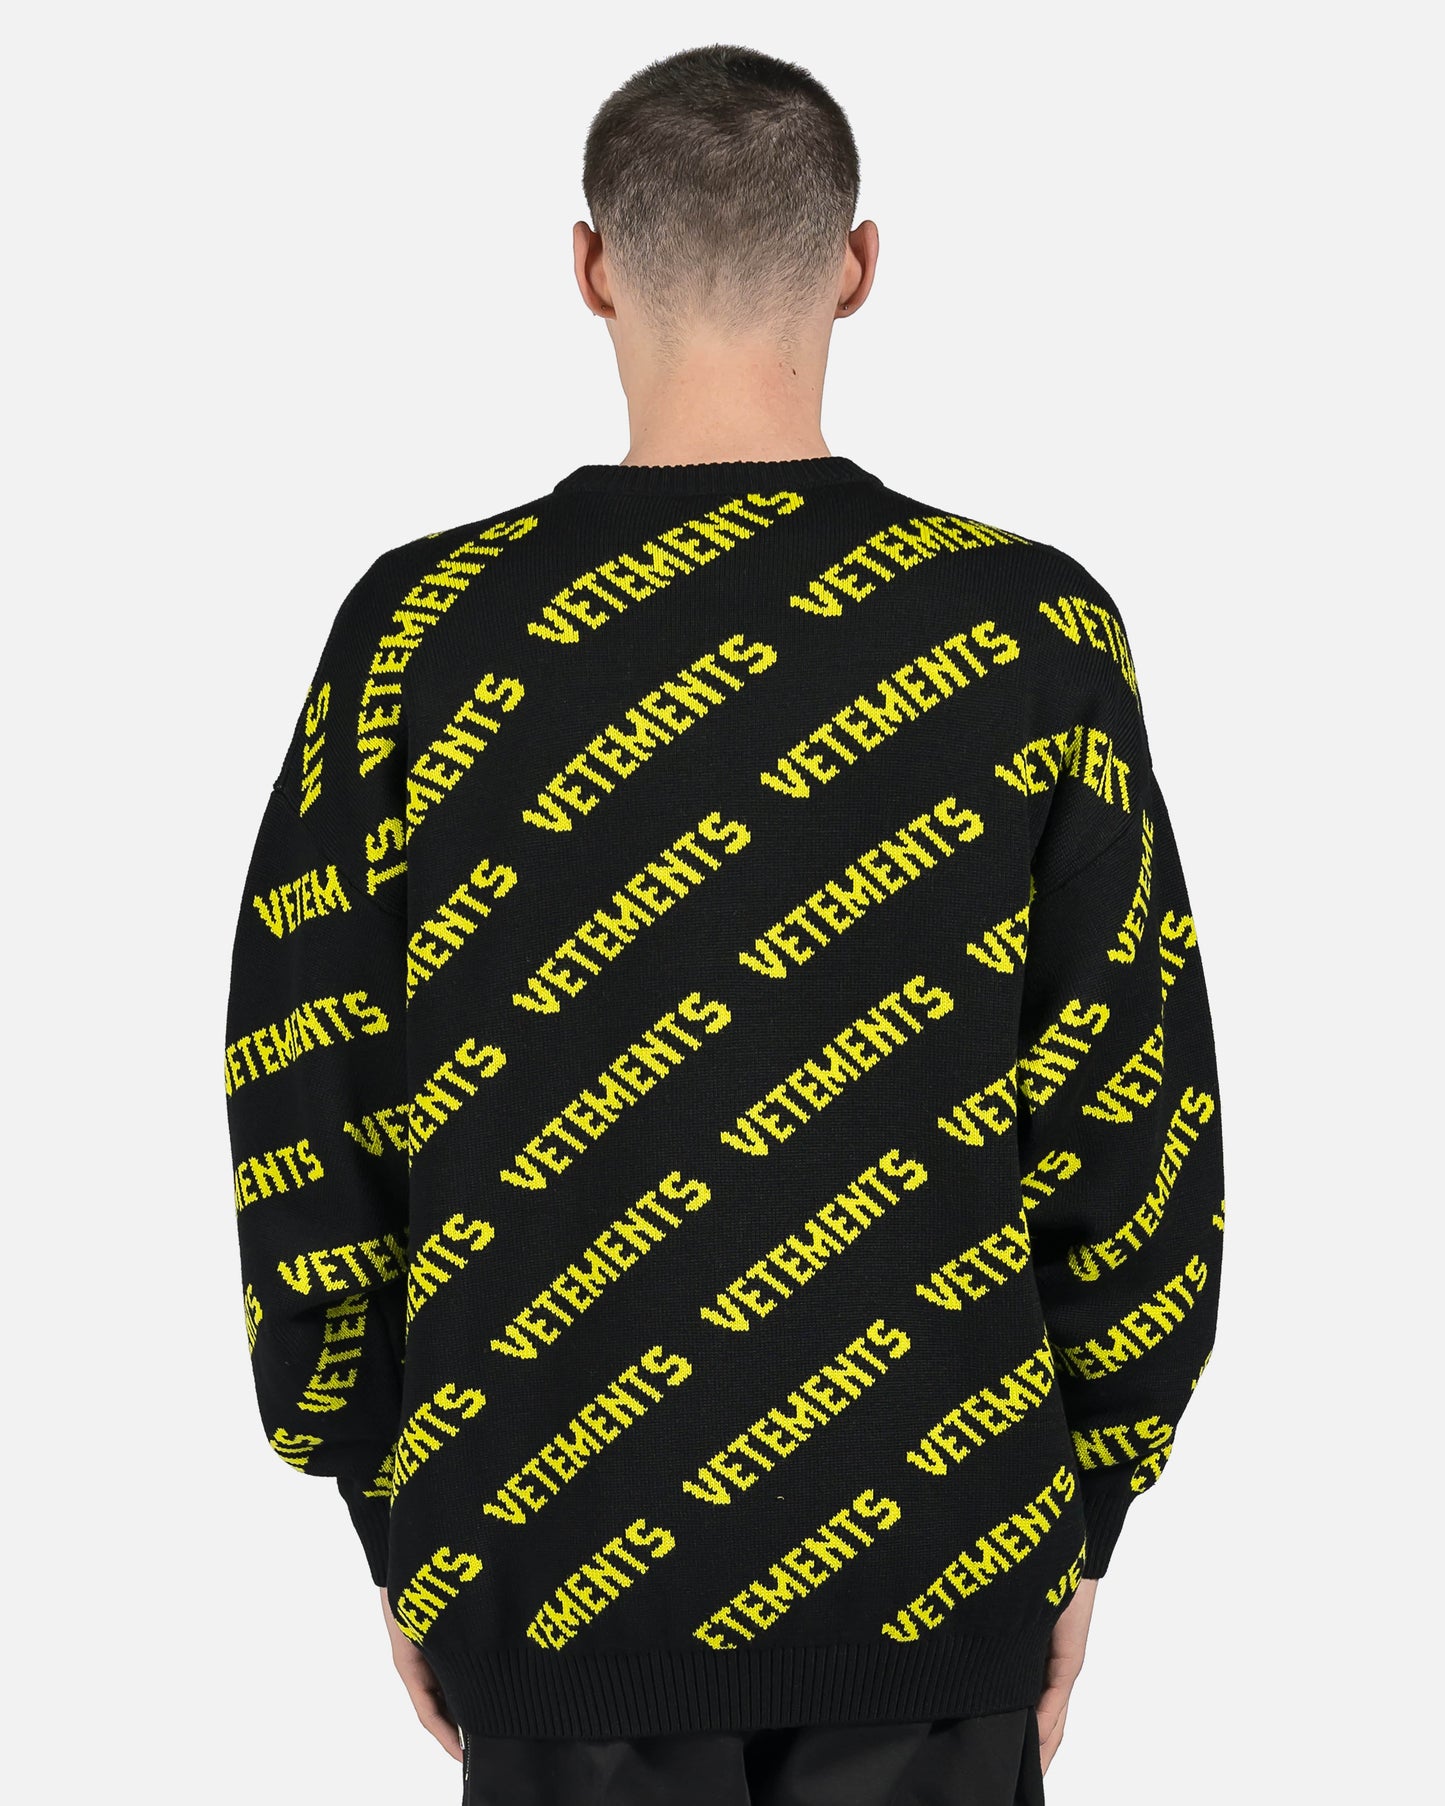 VETEMENTS Men's Sweatshirts Monogram Knitted Sweater in Black/Yellow